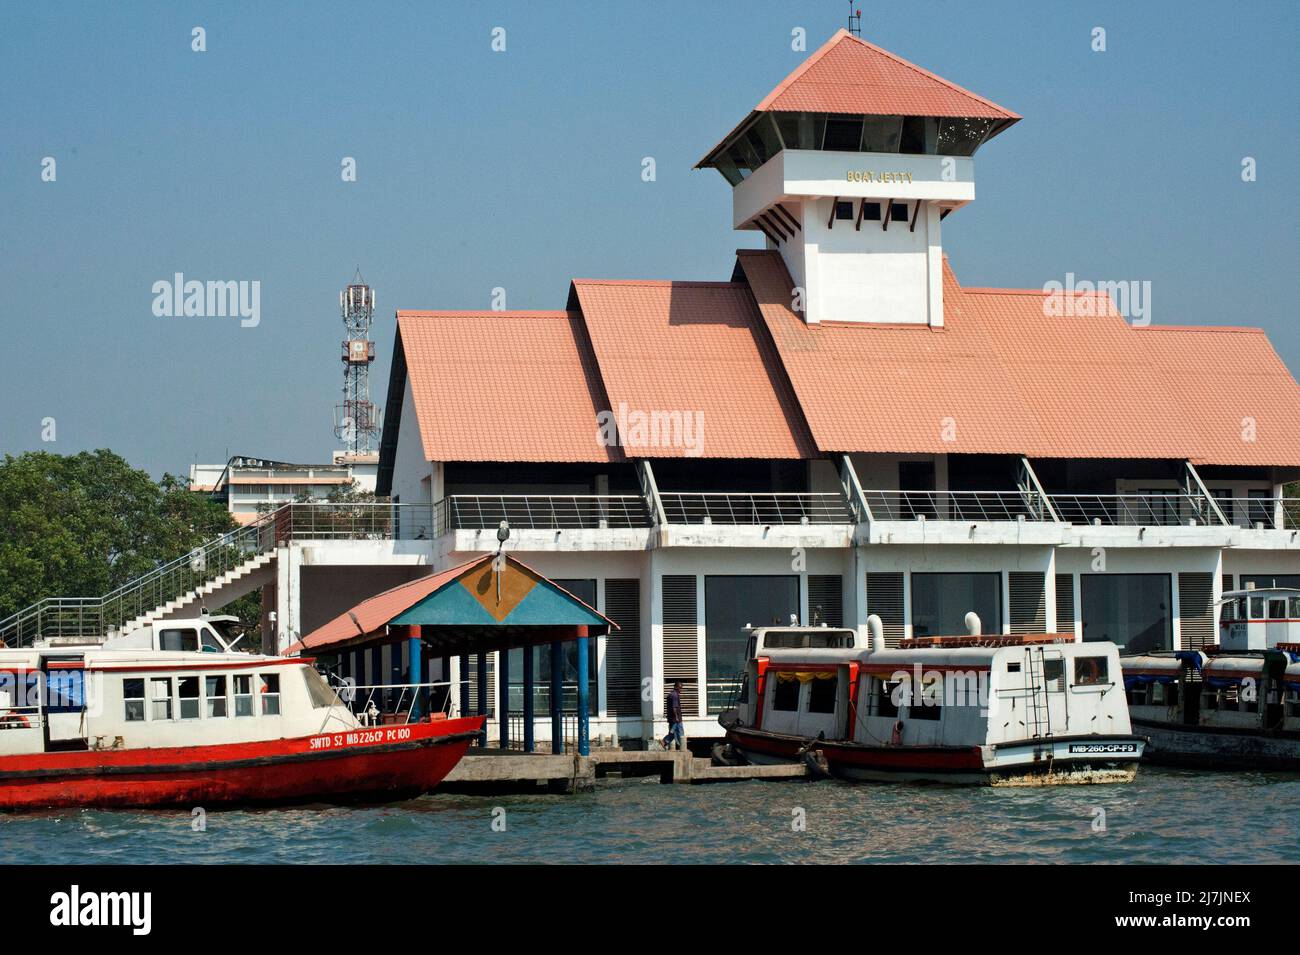 Ernakulam main jetty and ferry boat state Kerala India 02 04 2010 Stock Photo